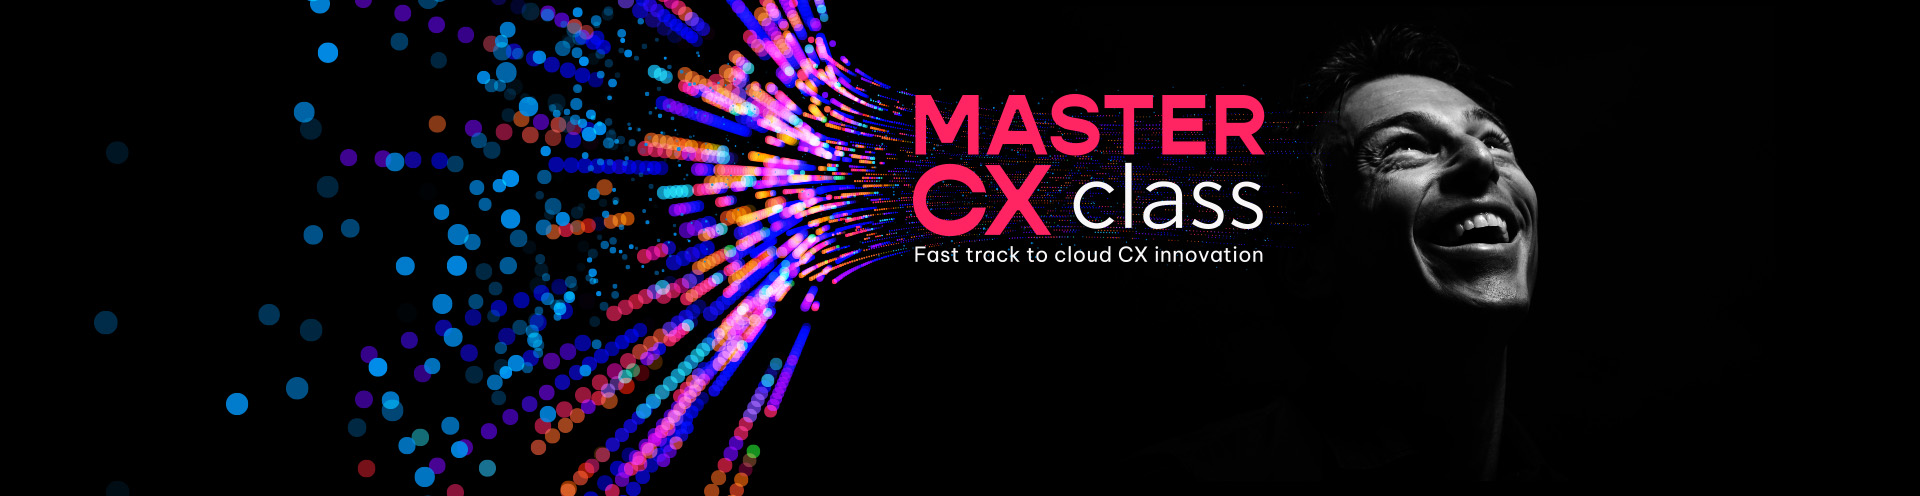 mastercx-newlp-banner.png